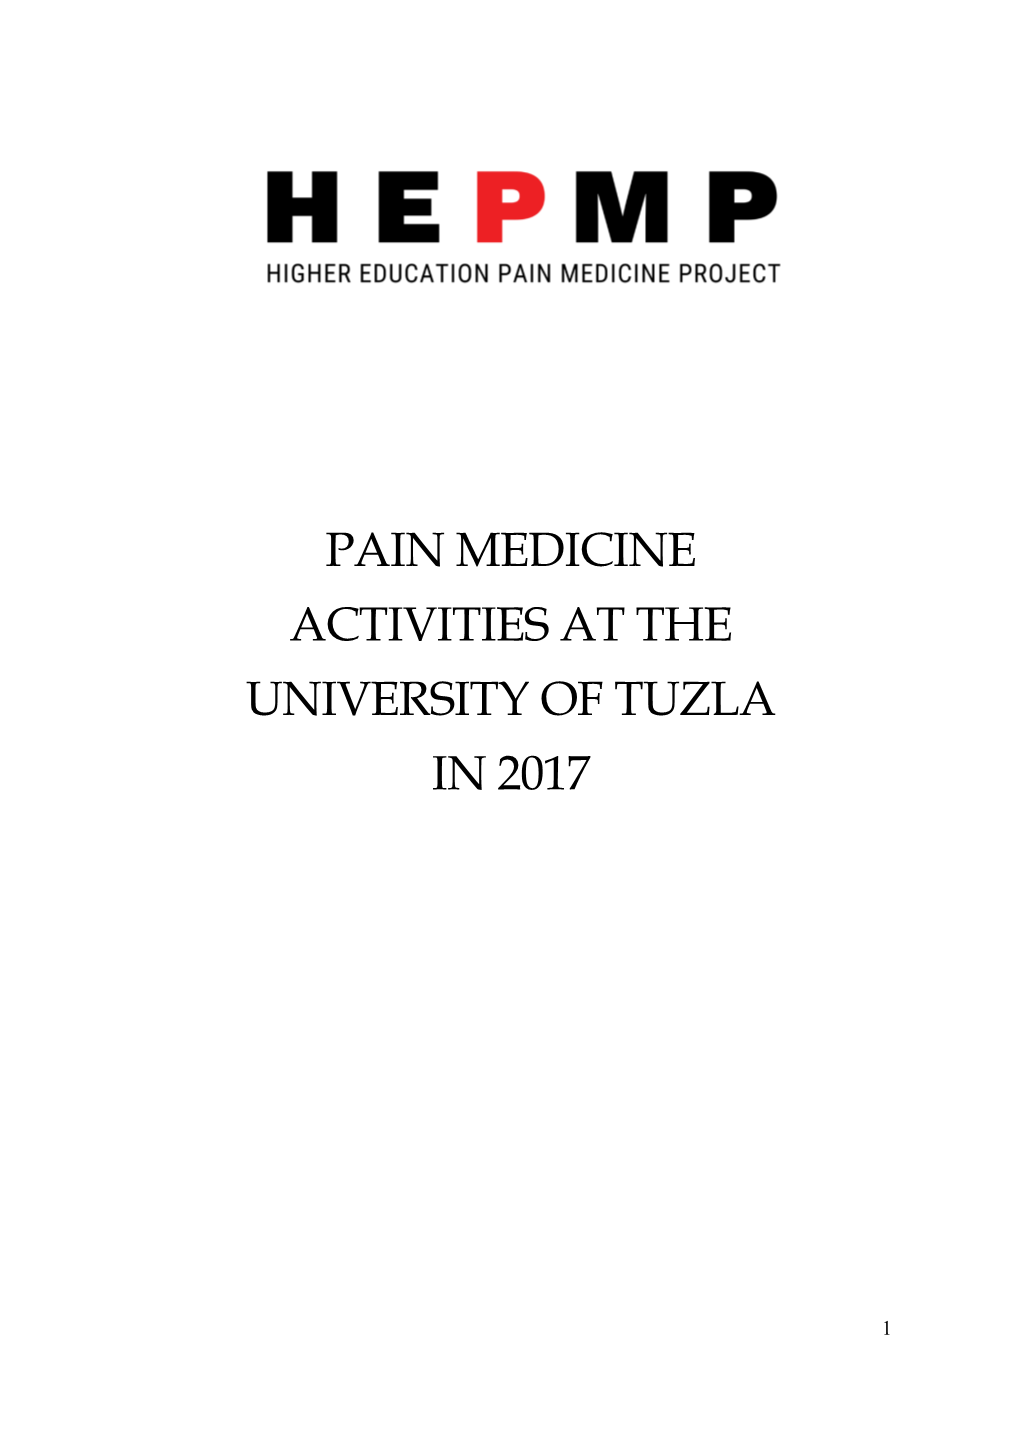 Pain Medicine Activities at the University of Tuzla in 2017